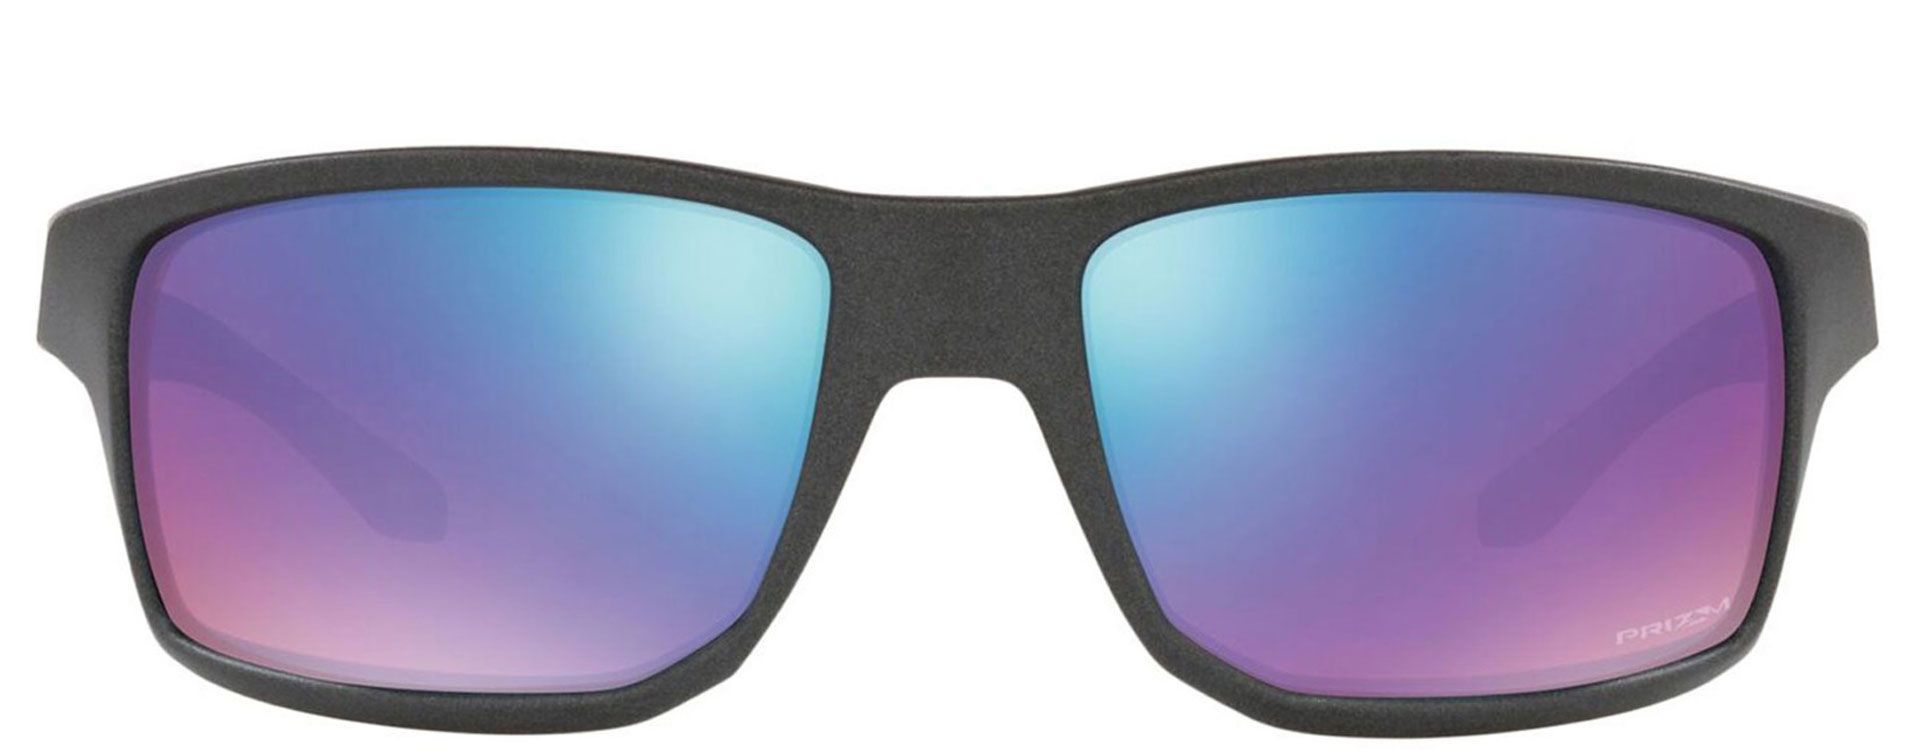 Gibston solbriller | Extra Optical